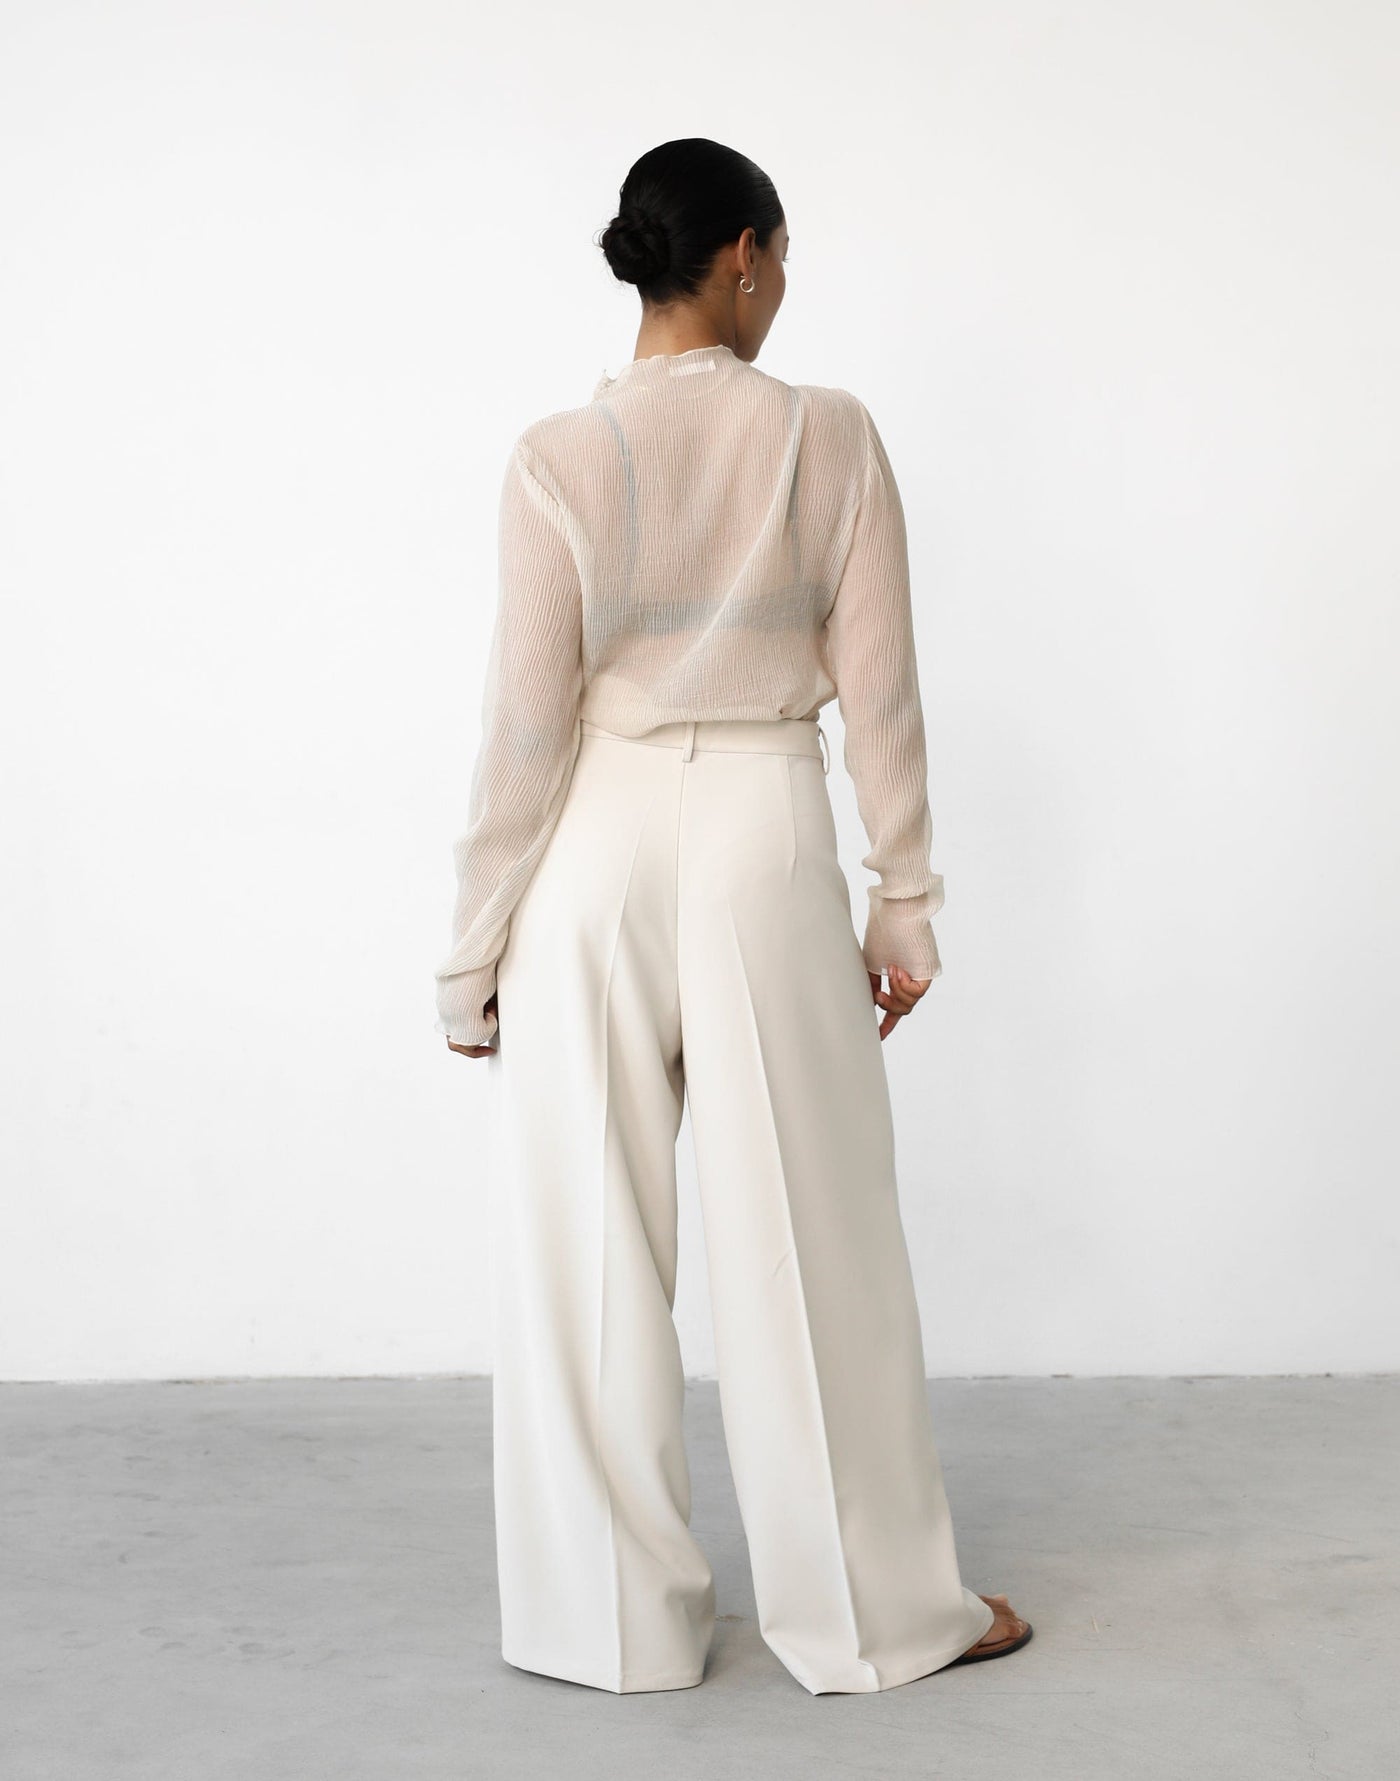 Vista Long Sleeve (Oat) - Oat Long Sleeve Top - Women's Top - Charcoal Clothing